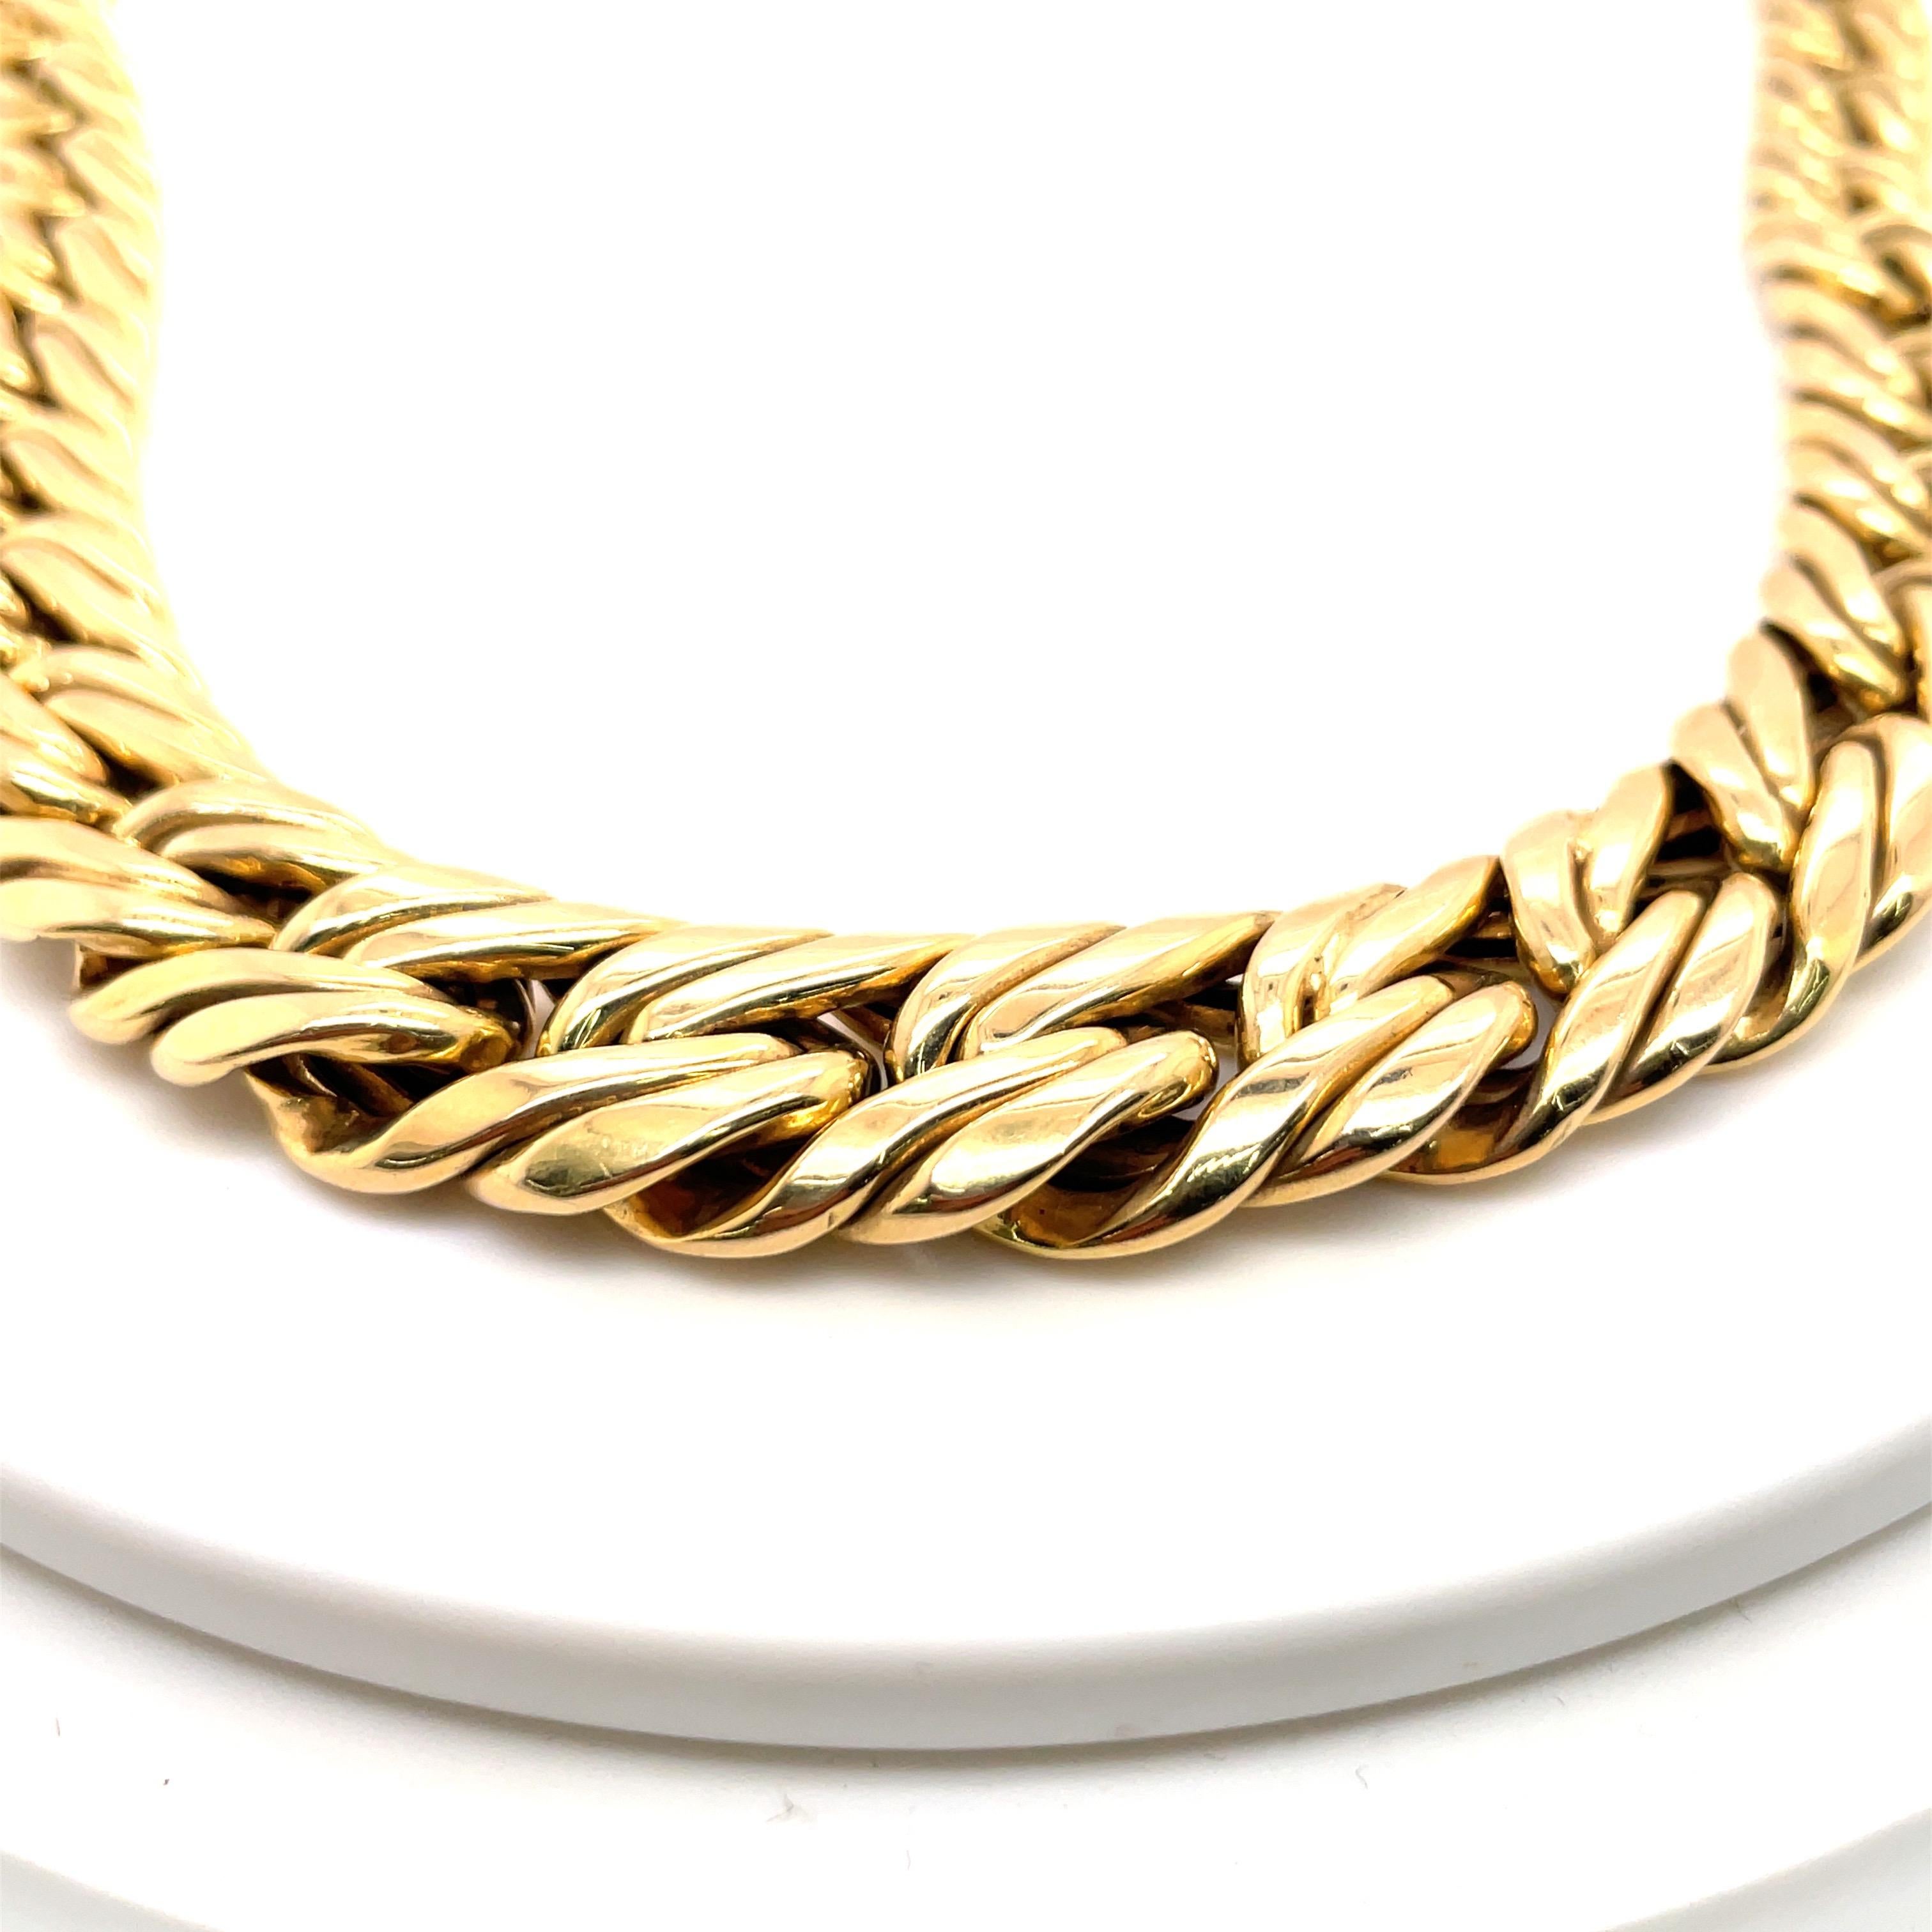 56 gram gold chain